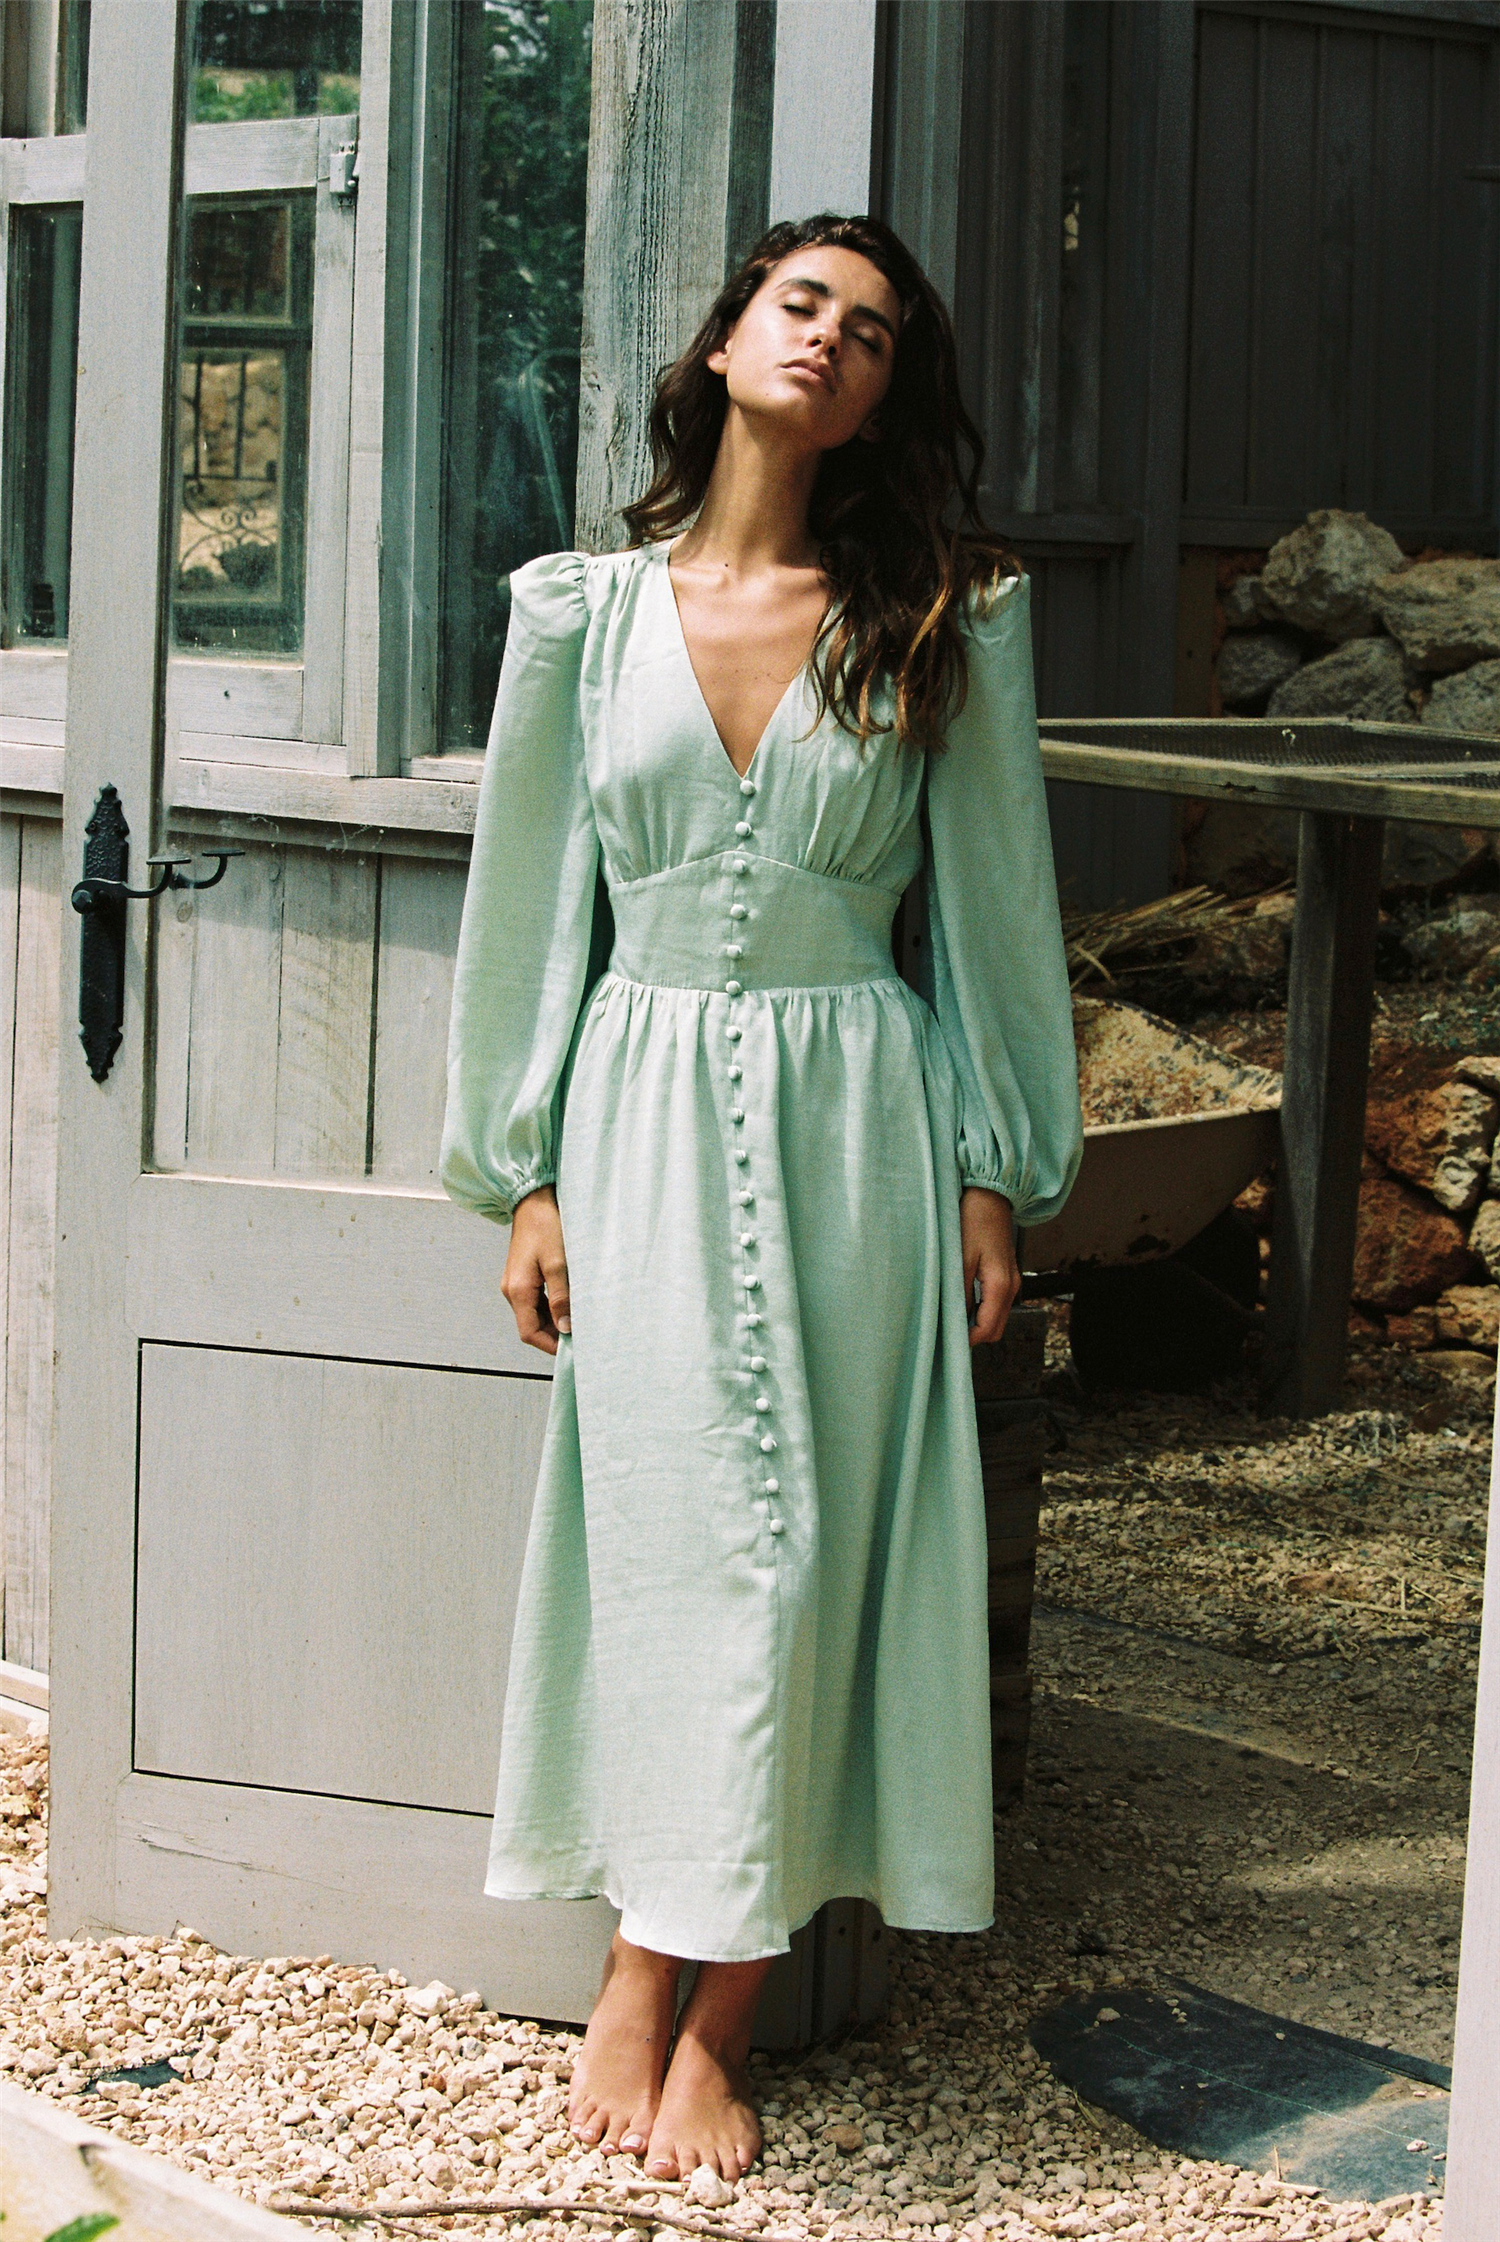 •	Charlize Tuscany Midi Dress